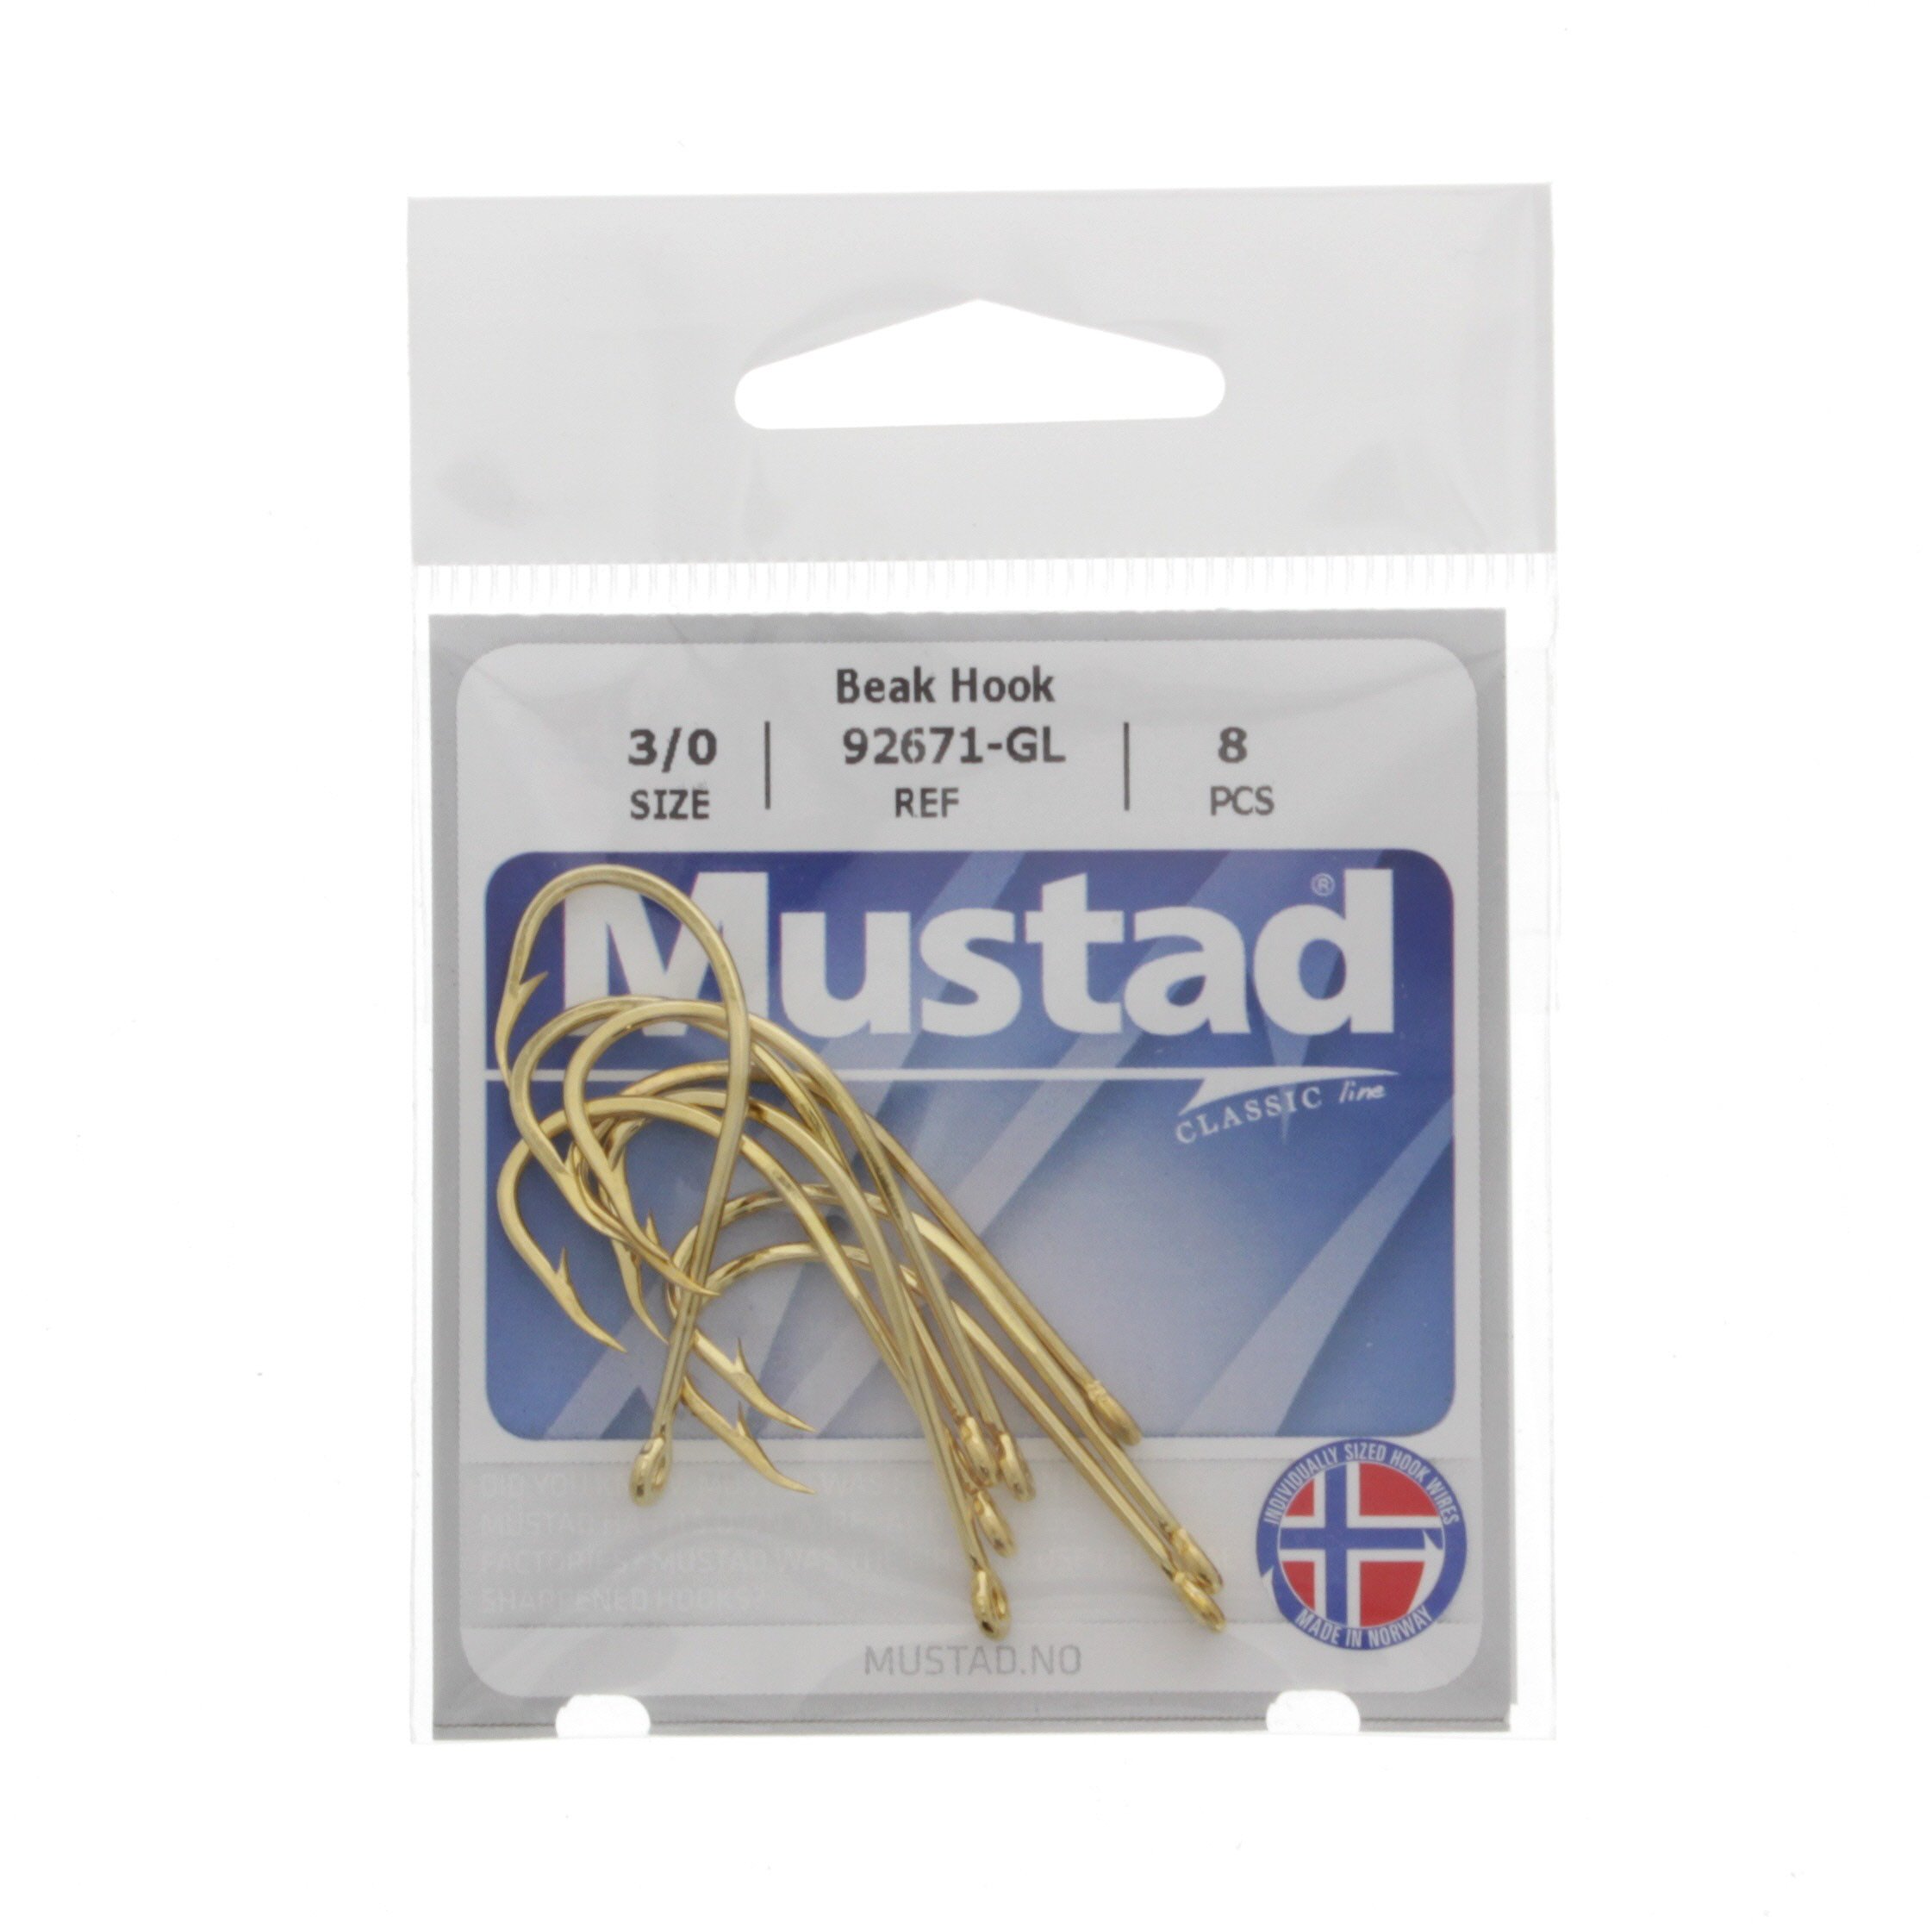 Mustad Gold Beck Hook 3/0